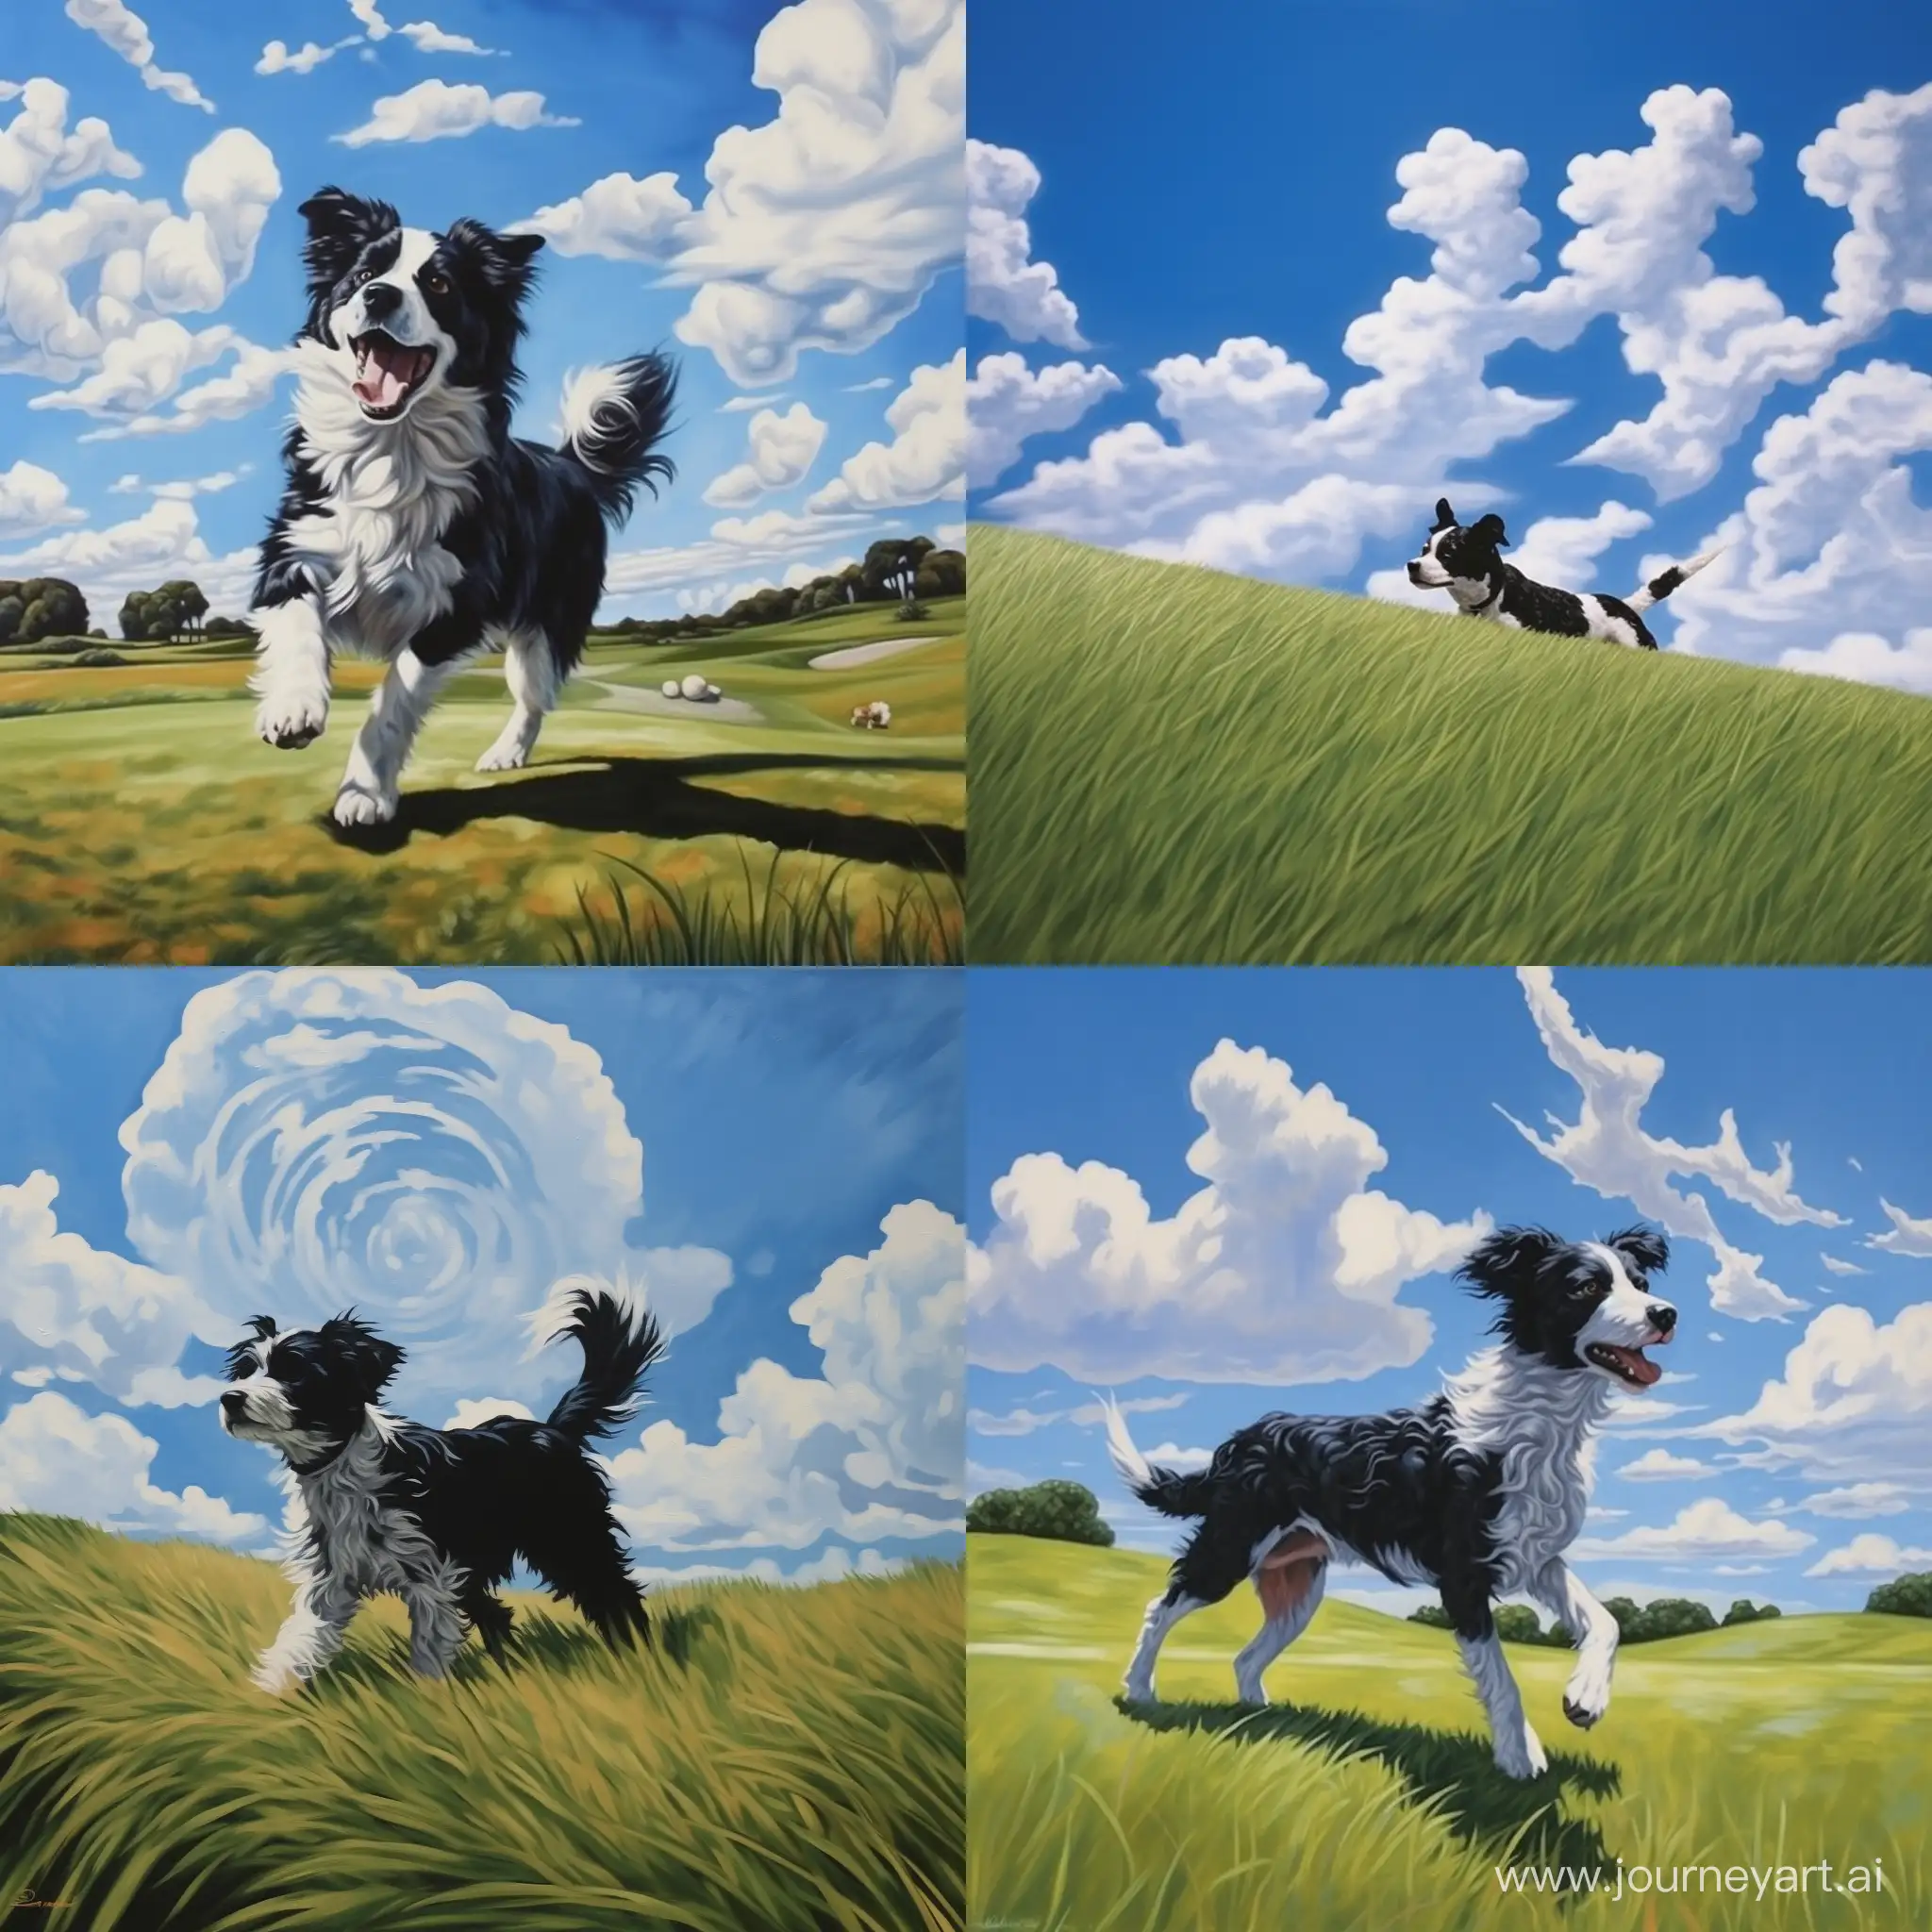 Joyful-Black-and-White-Dog-Playing-on-Green-Grass-under-Blue-Sky